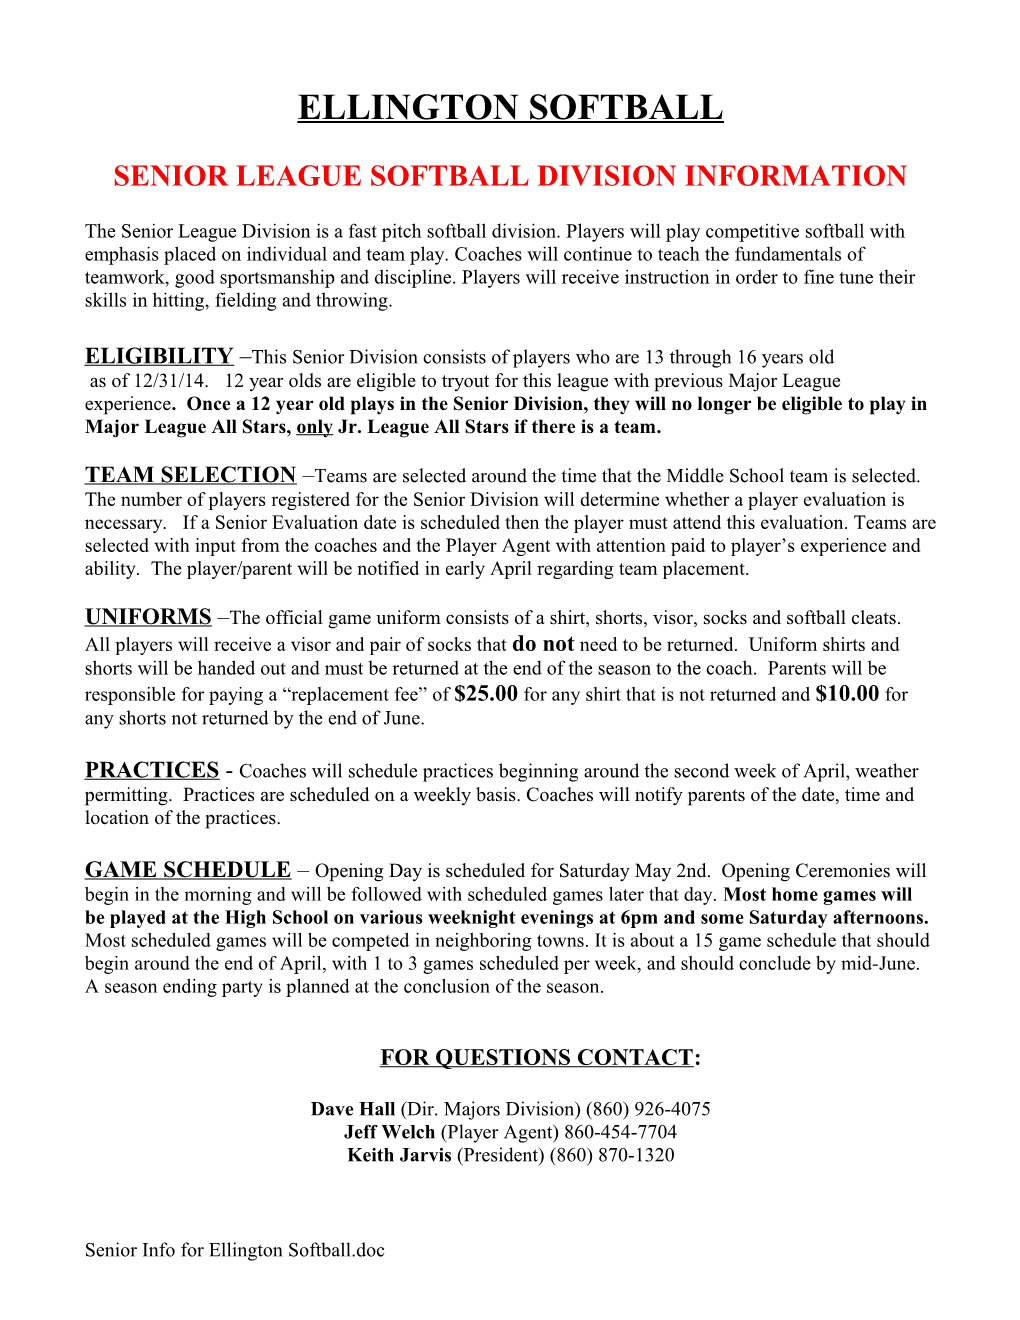 Senior League Softball Division Information